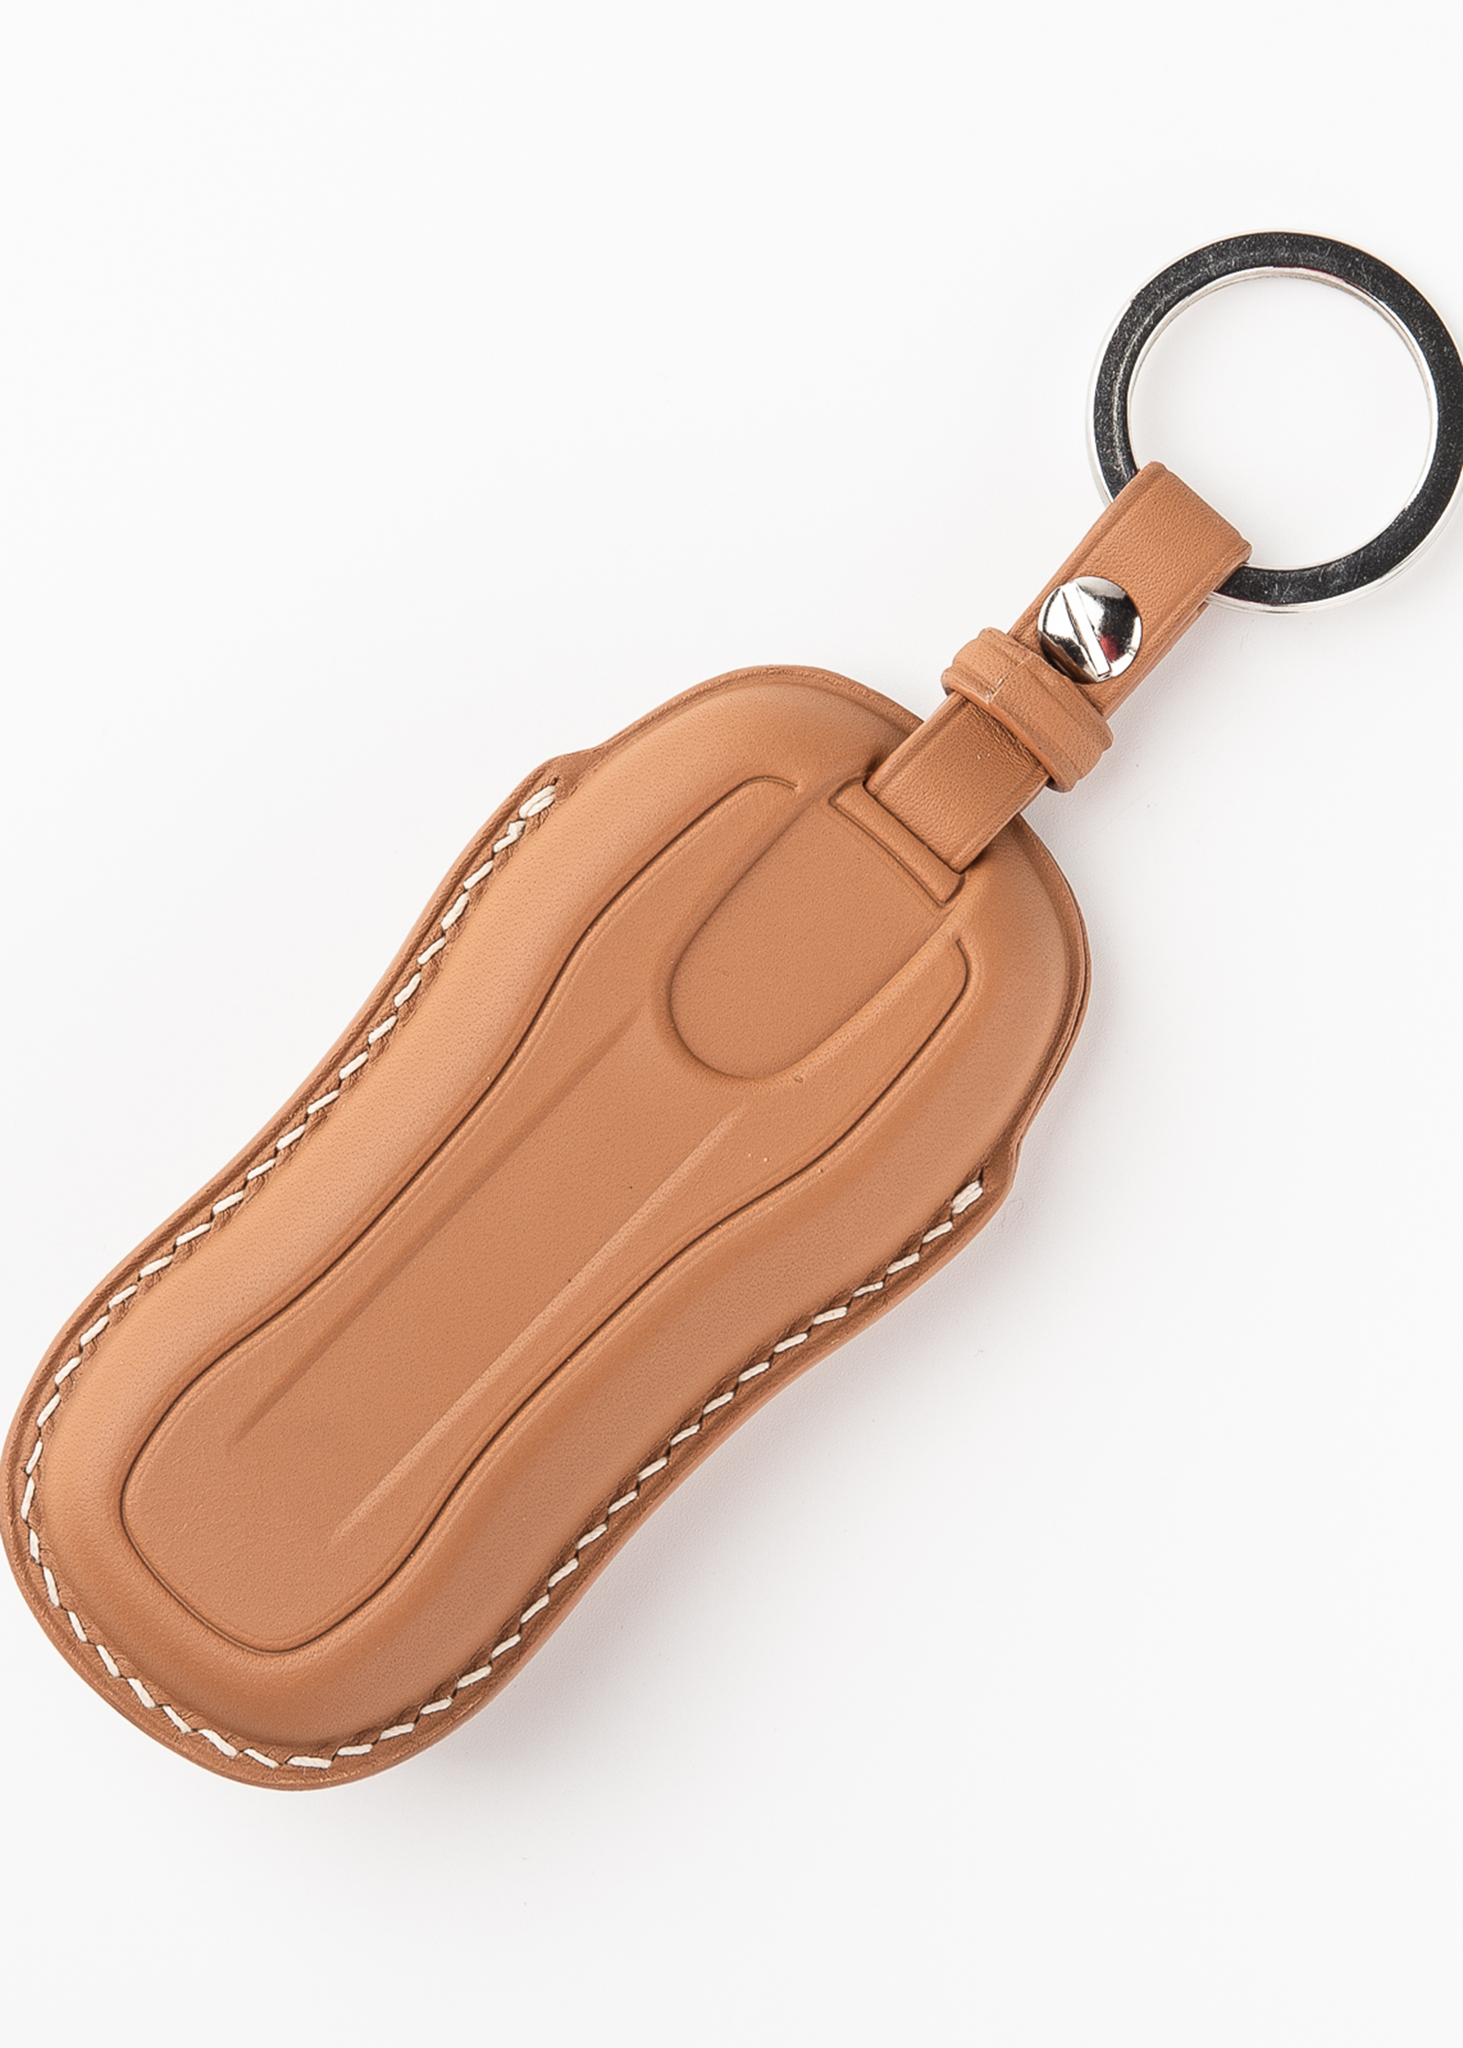 Timotheus for Porsche key fob cover case, Compatible with Porsche key case, Handmade Genuine Leather for Porsche keychains | PR33